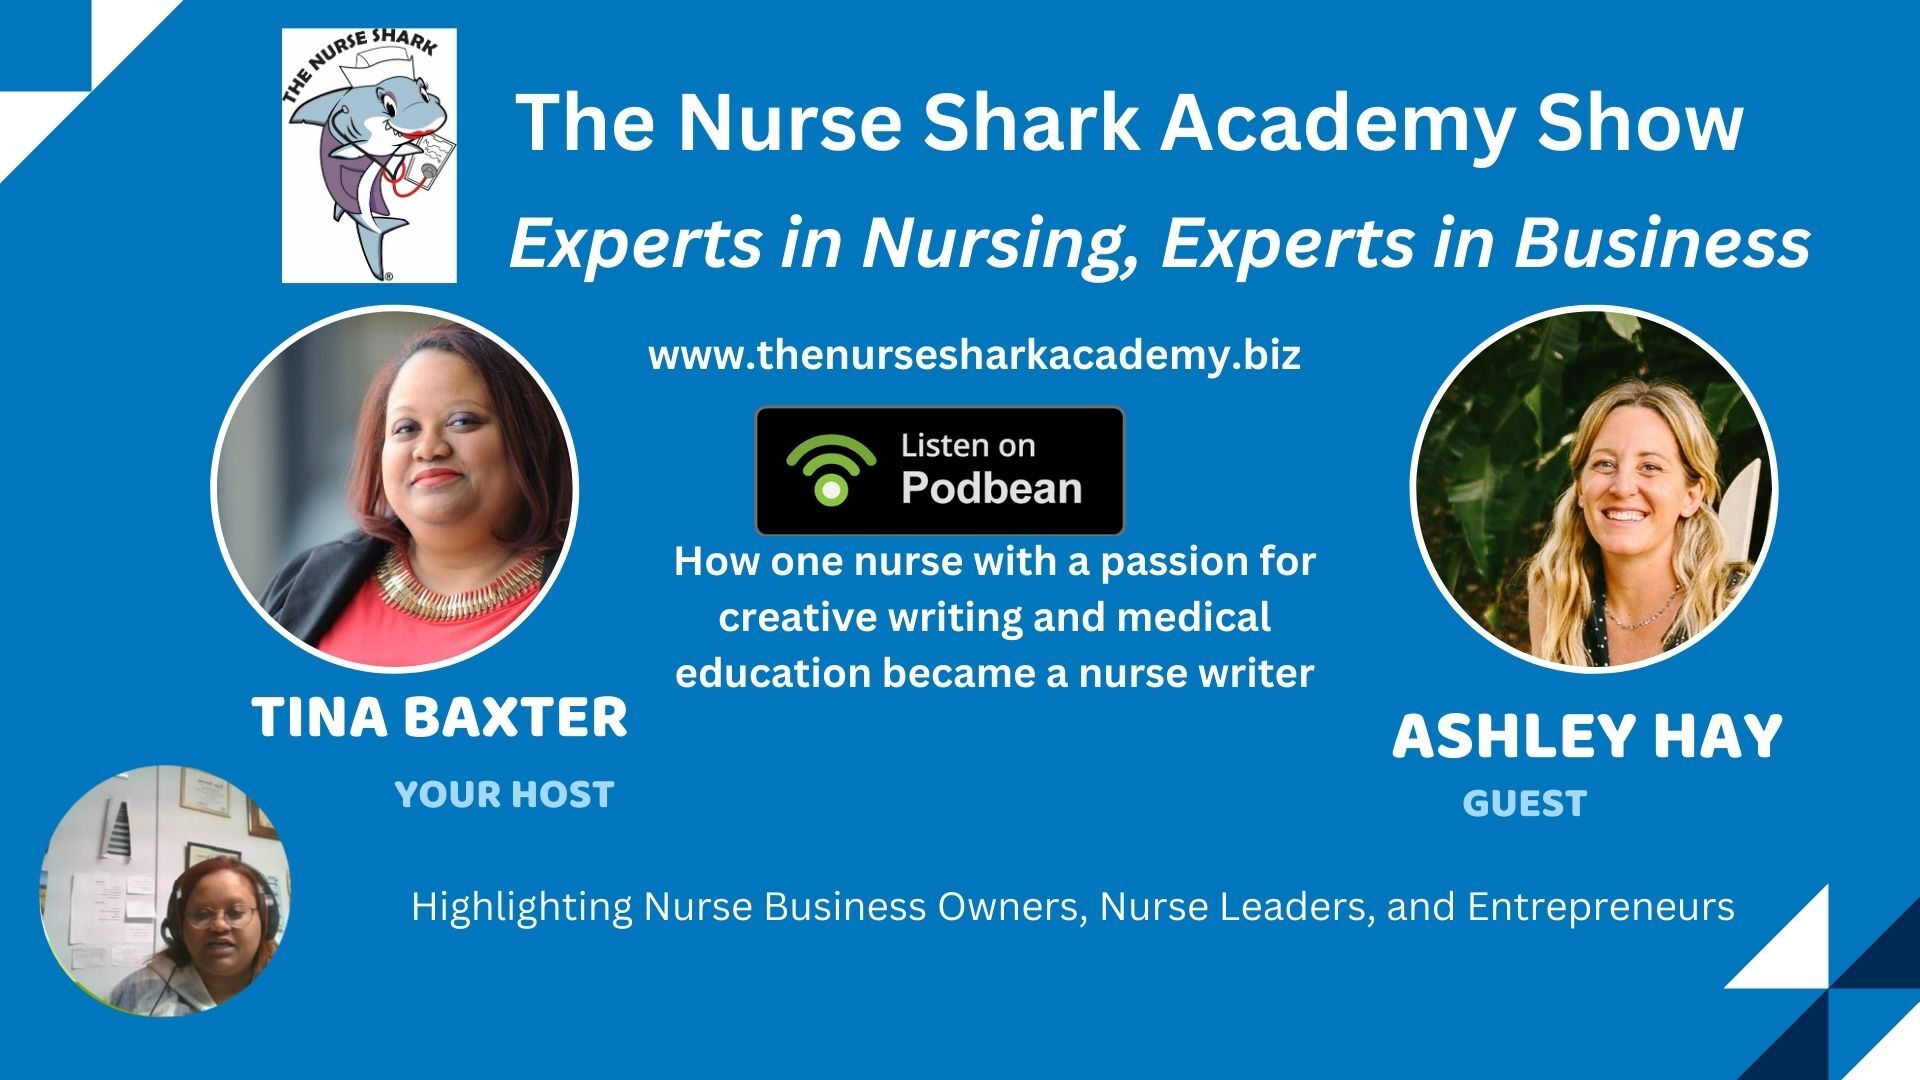 The_Nurse_Shark_Academy_Show_Asheley_Hay_Prom...